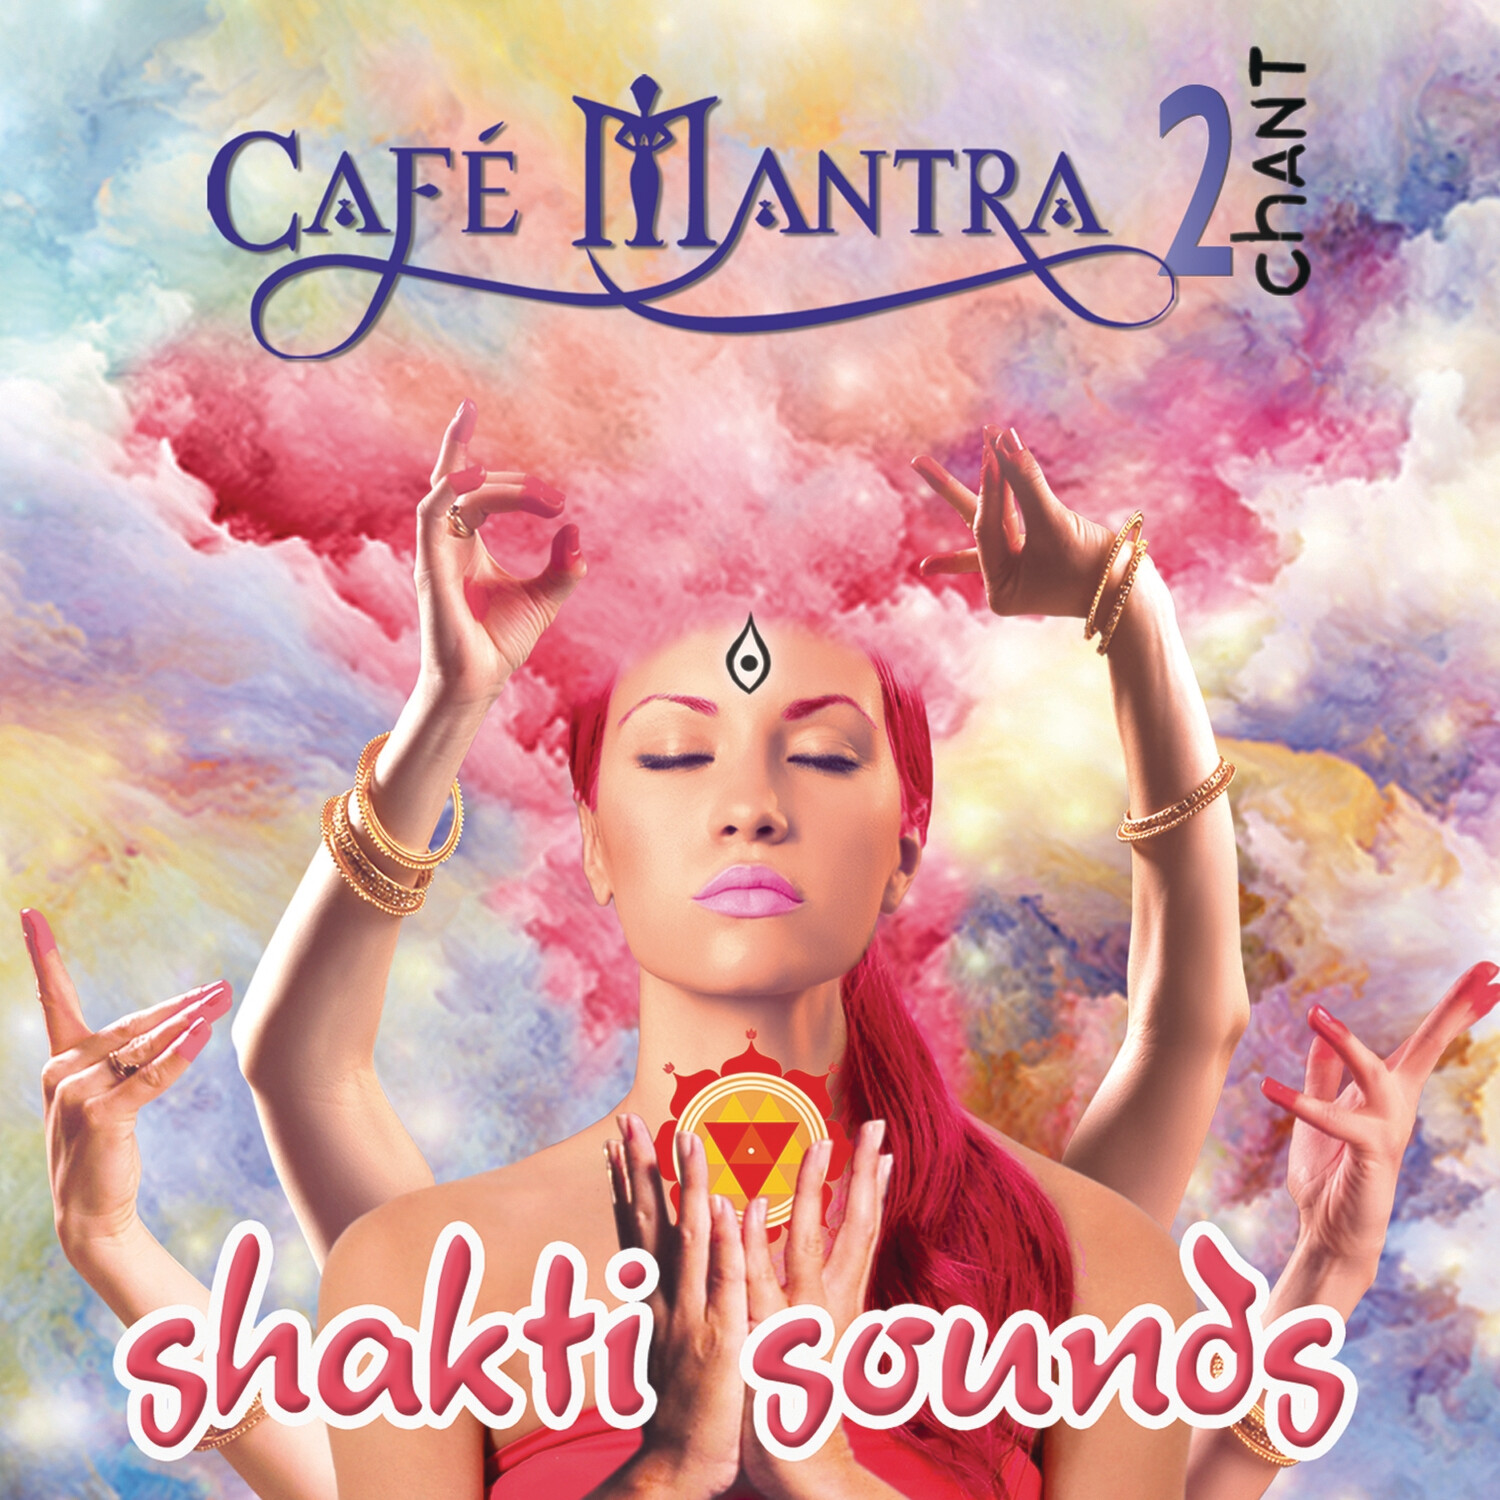 DOWNLOAD: Cafe Mantra Chant2 SHAKTI SOUNDS